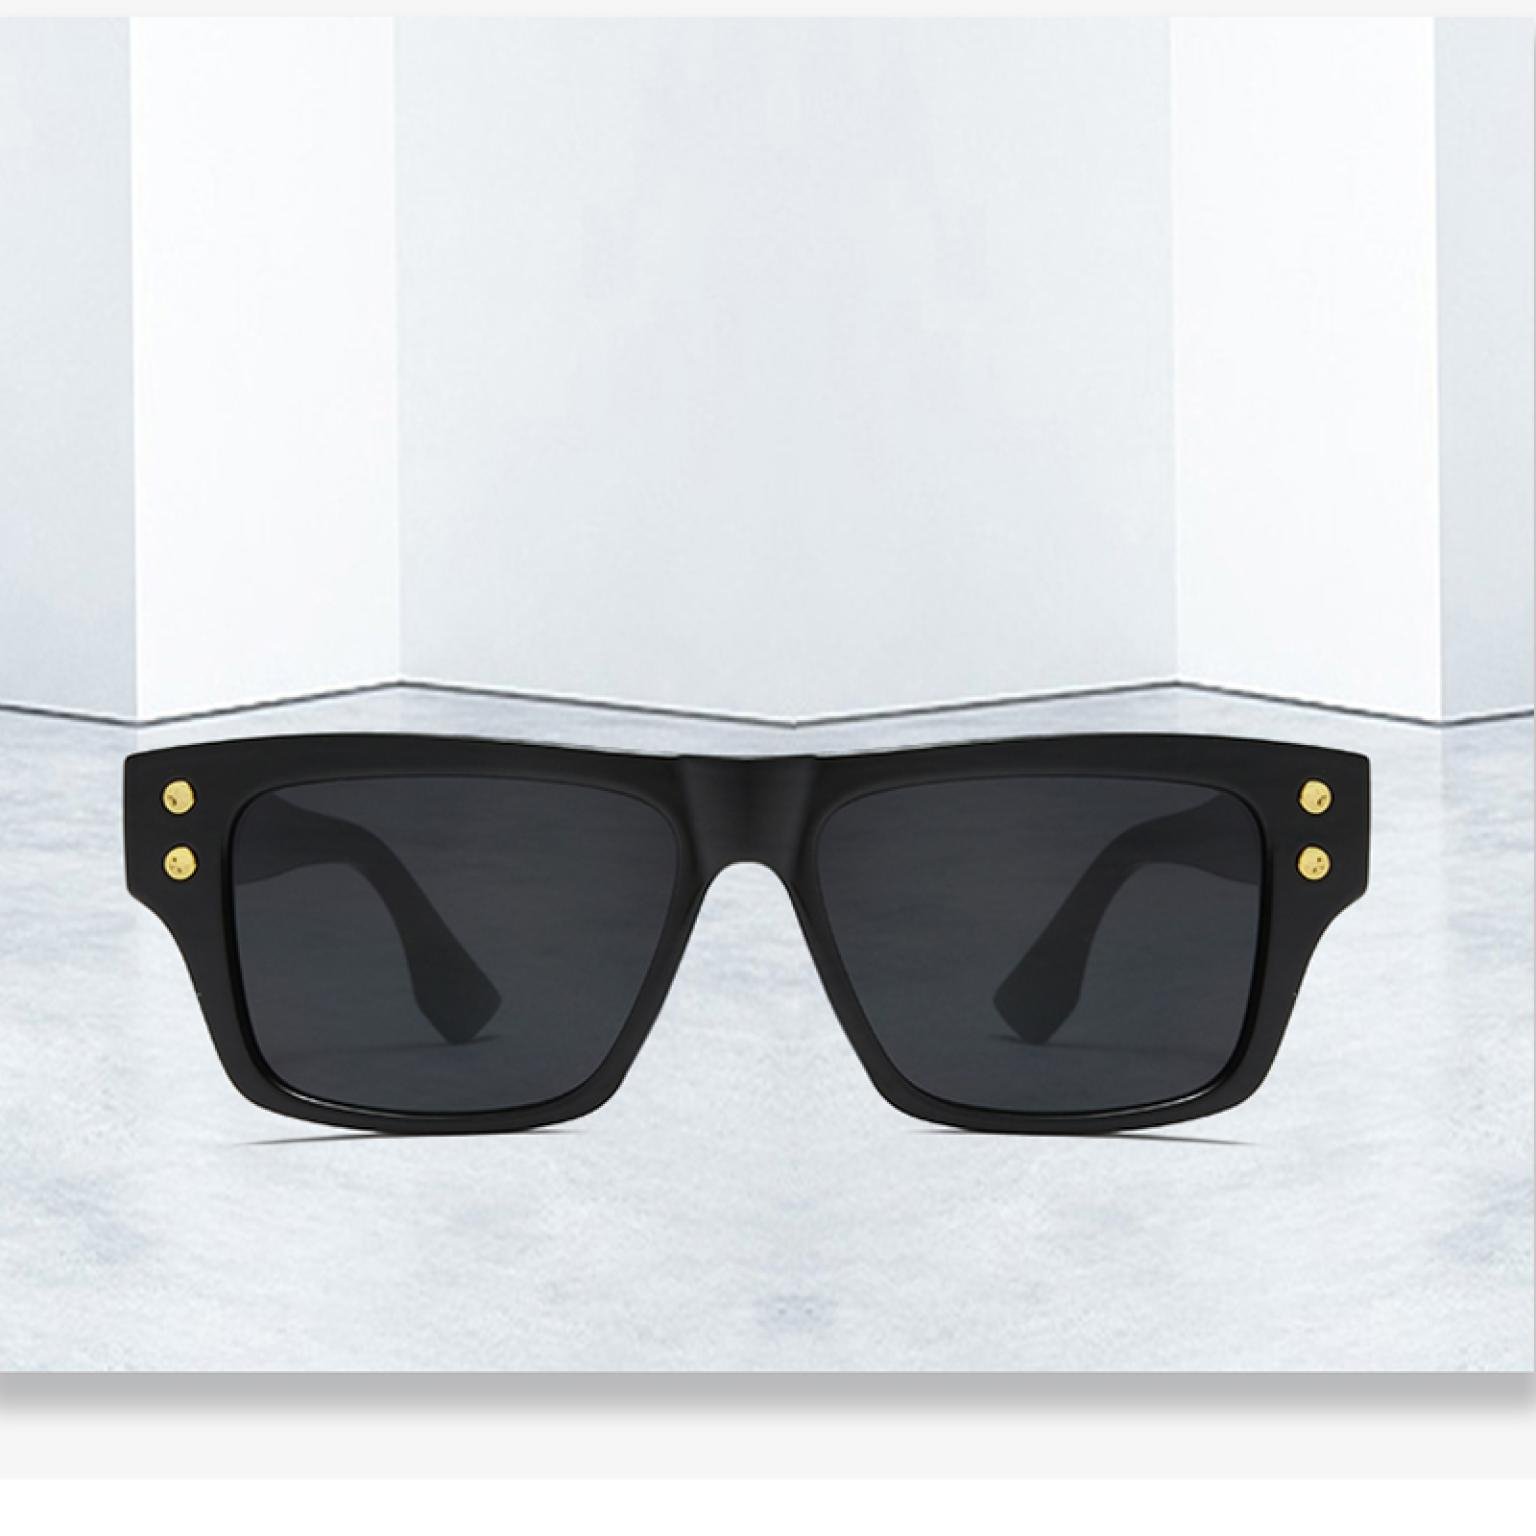 New Fashion Men Sunglasses Vintage Brand Design Classic Square Sun Glasses Women UV400 Protected